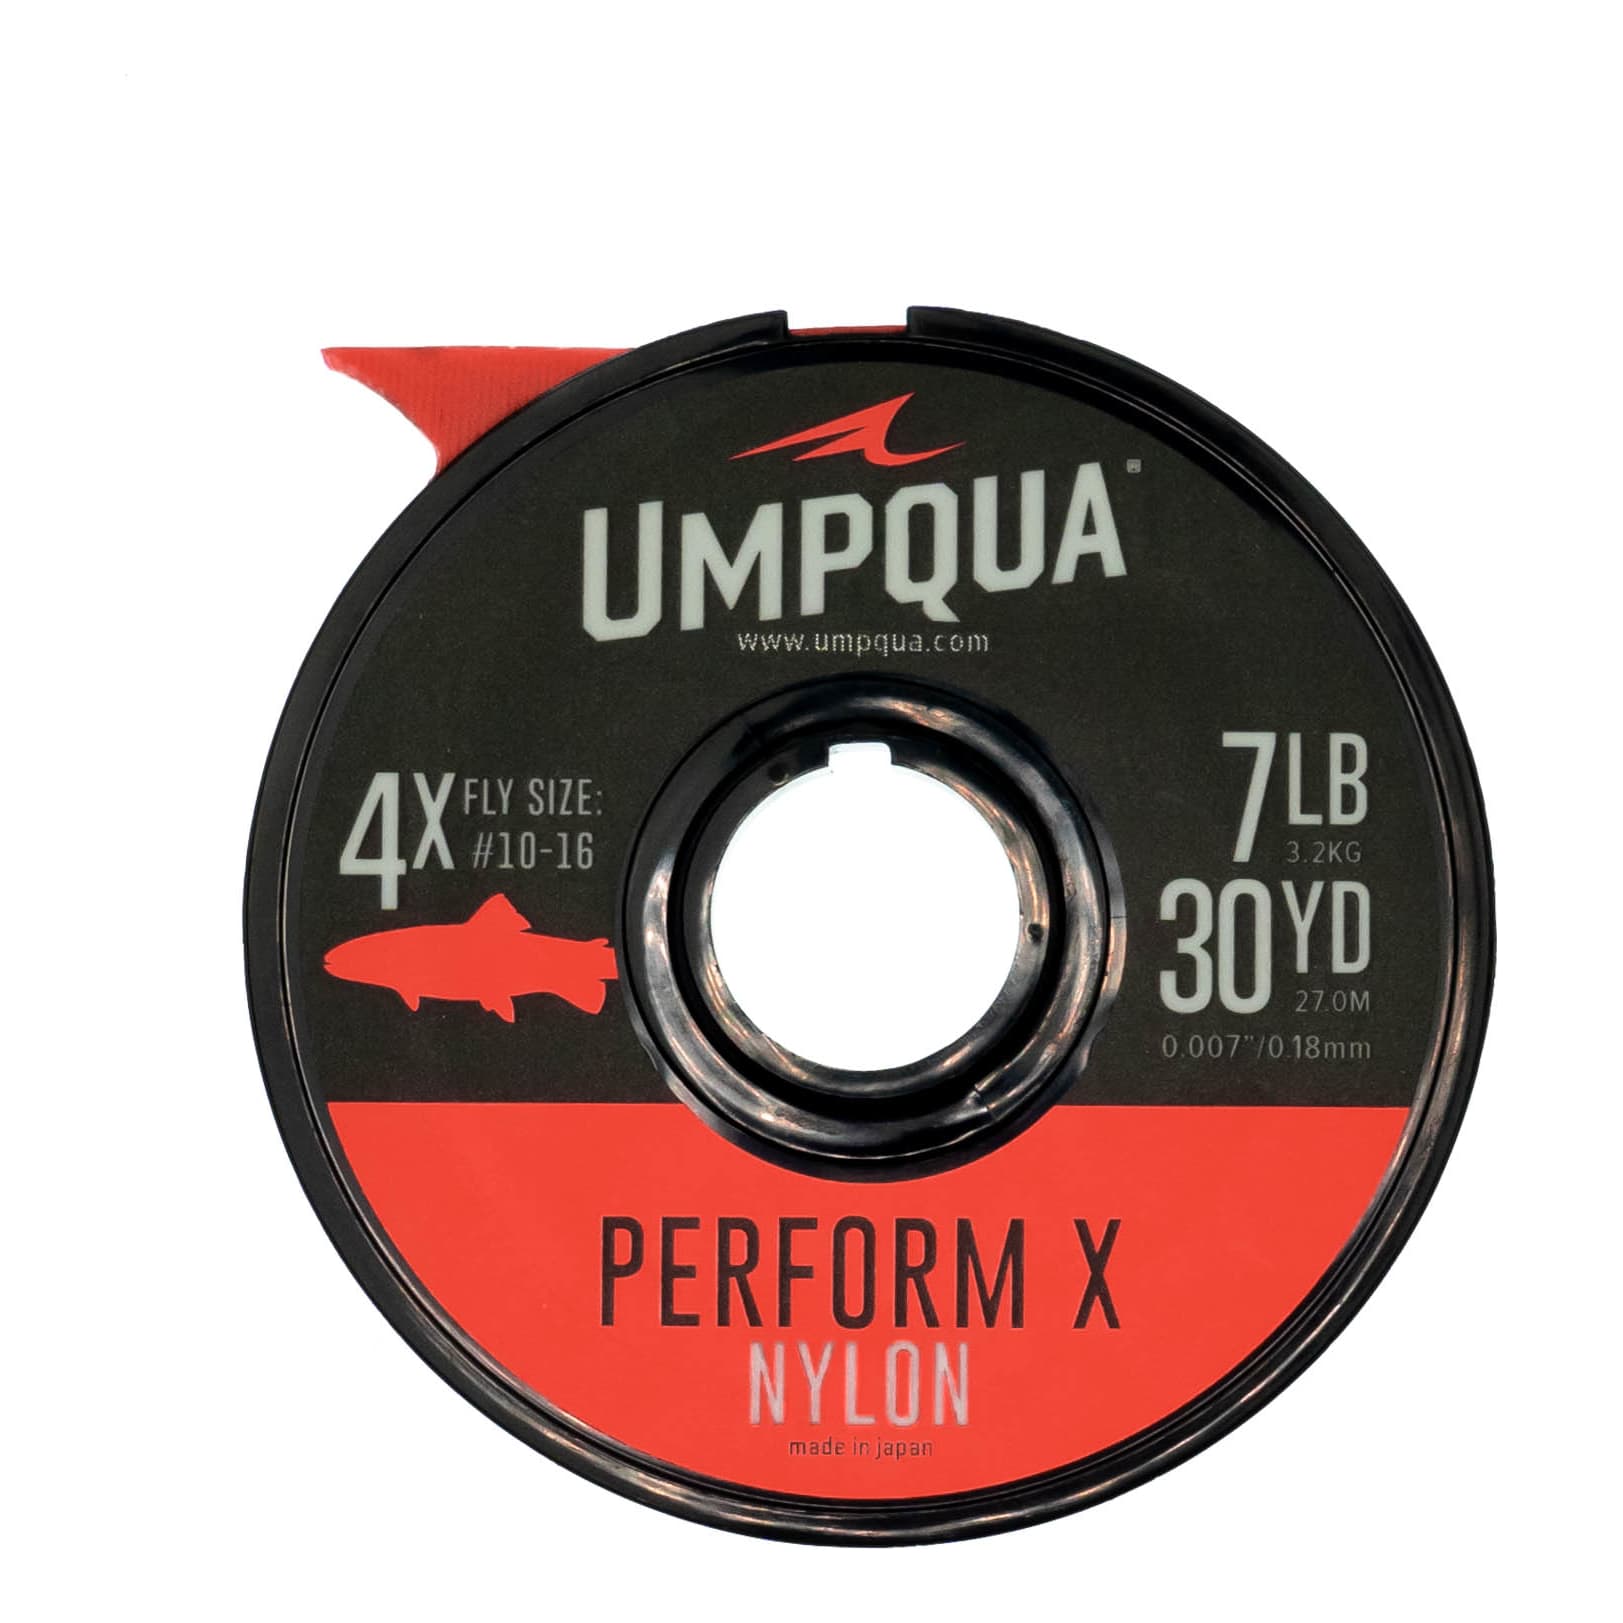 Umpqua Perform X Nylon Tippet, 6X